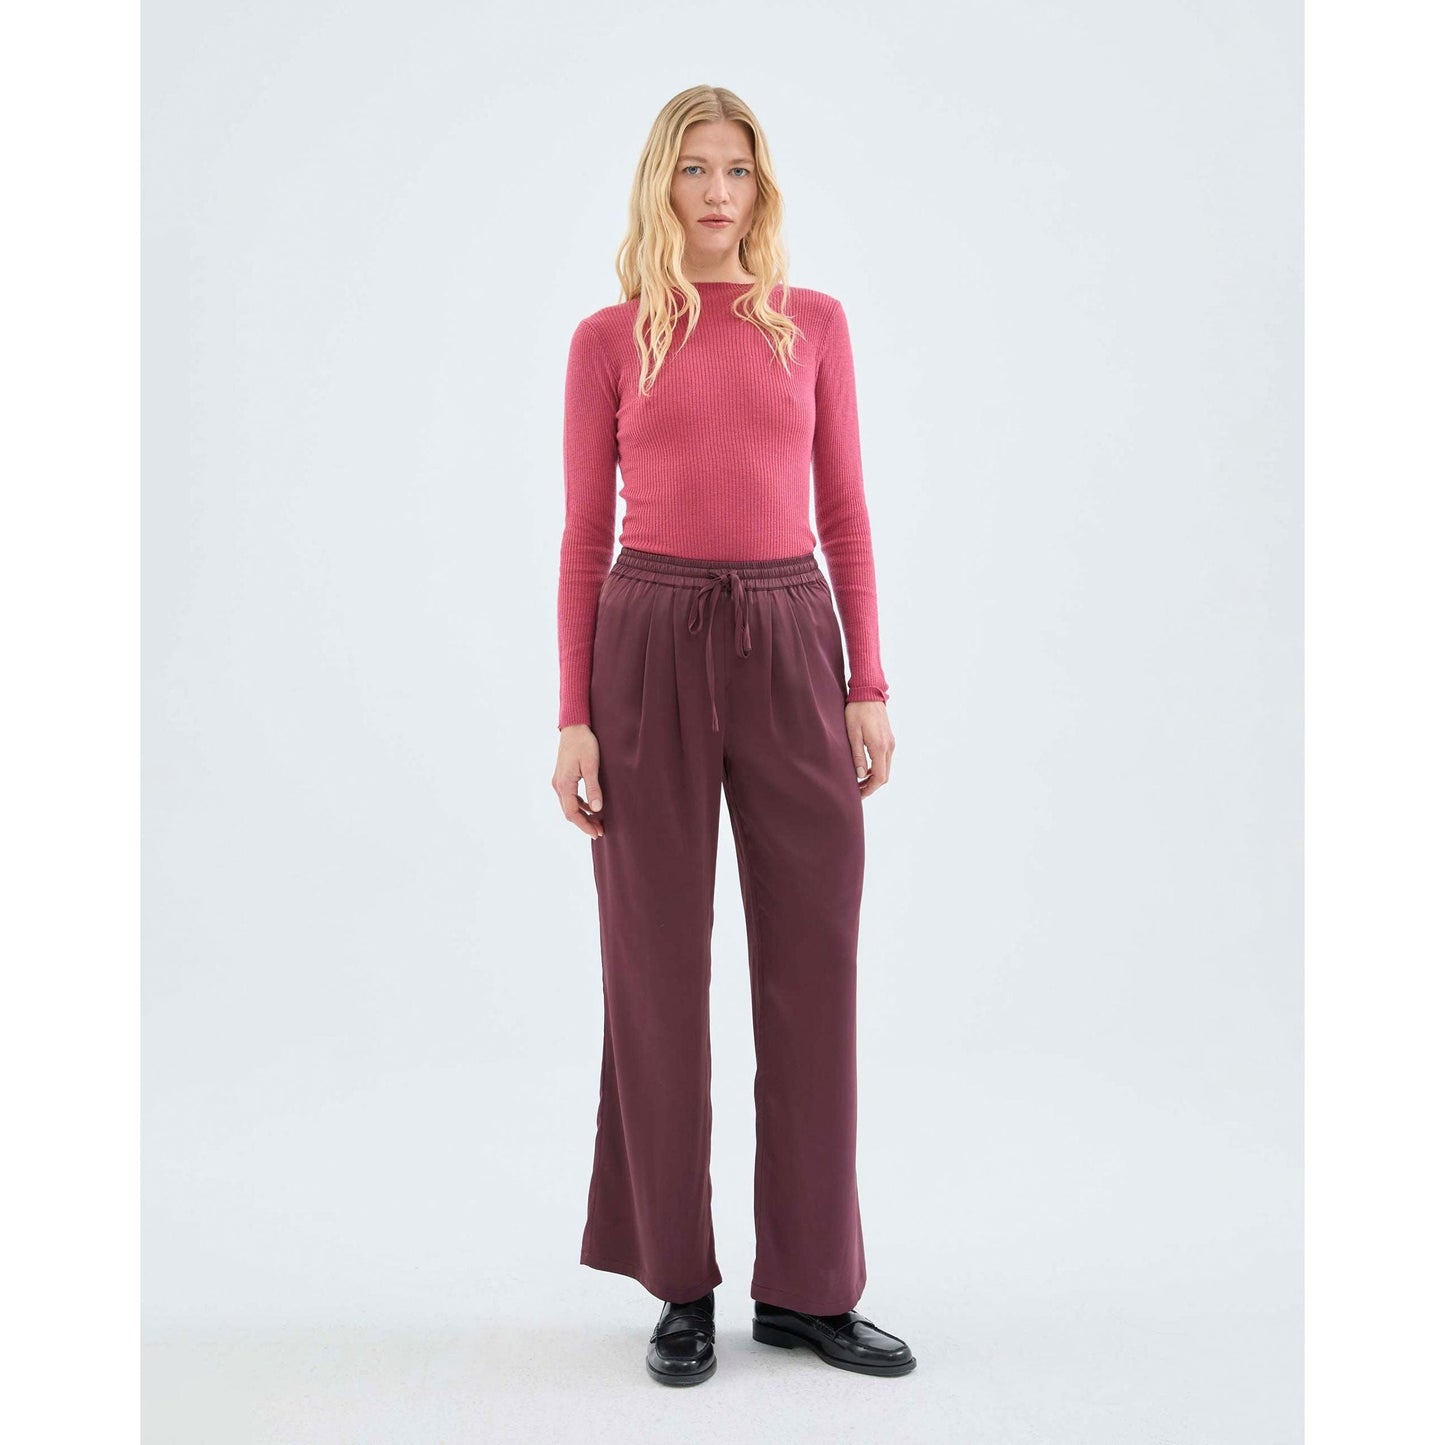 Compania Fantastica - Satin aubergine trousers with elastic waistband